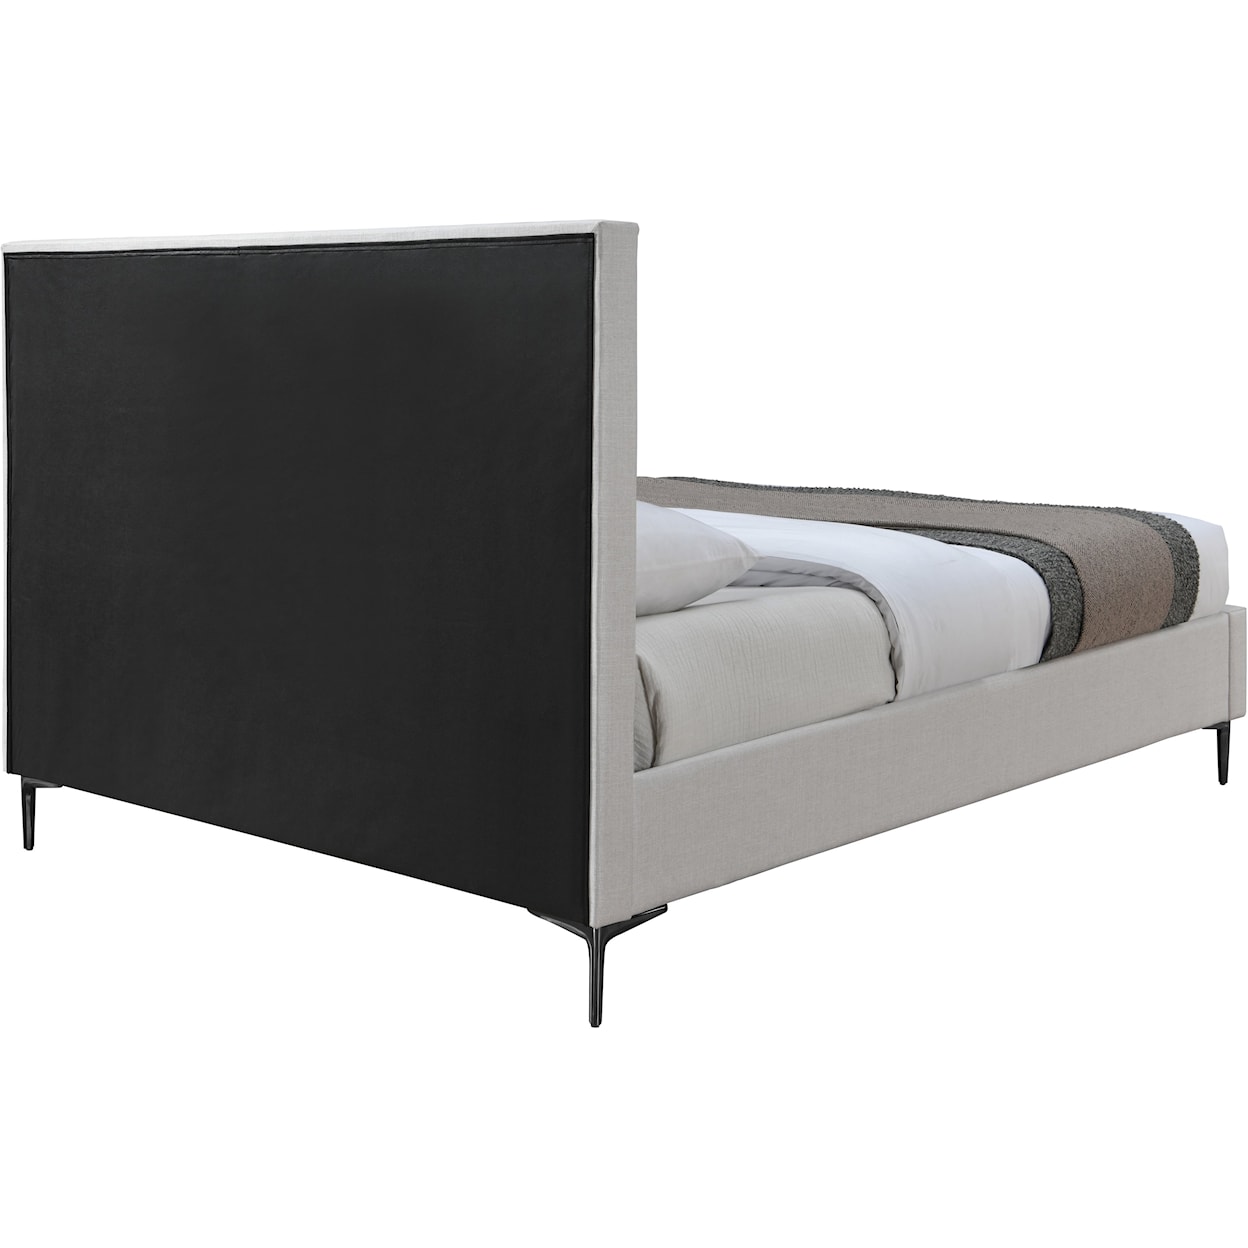 Meridian Furniture Hunter Full Bed